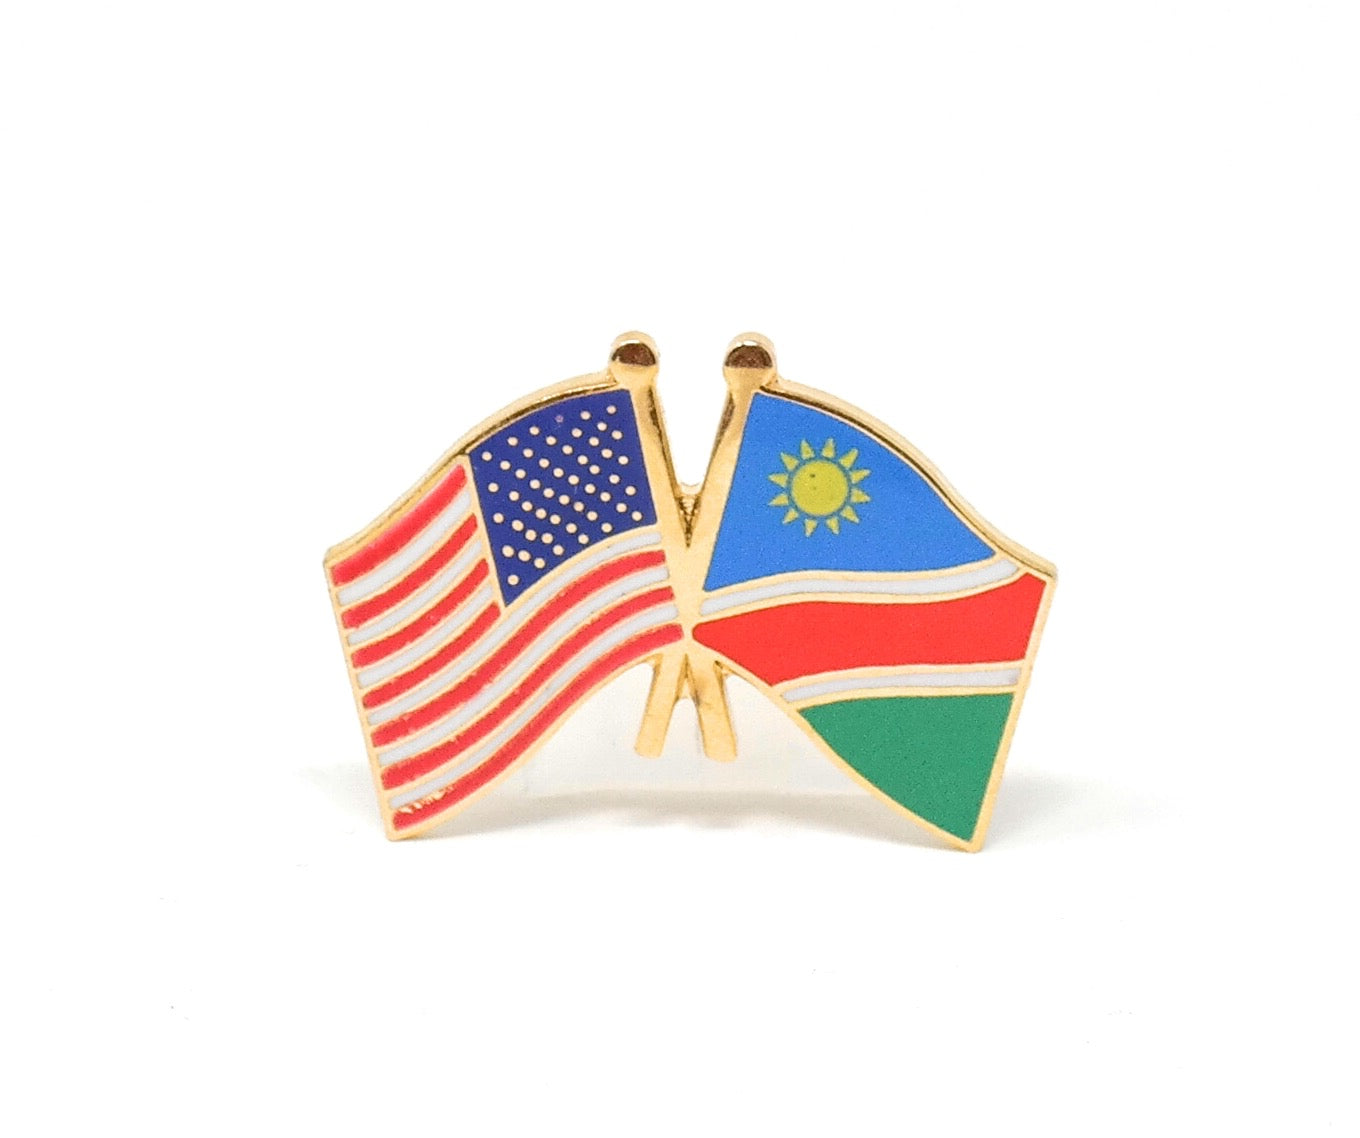 Namibia & USA Friendship Flags Lapel Pin